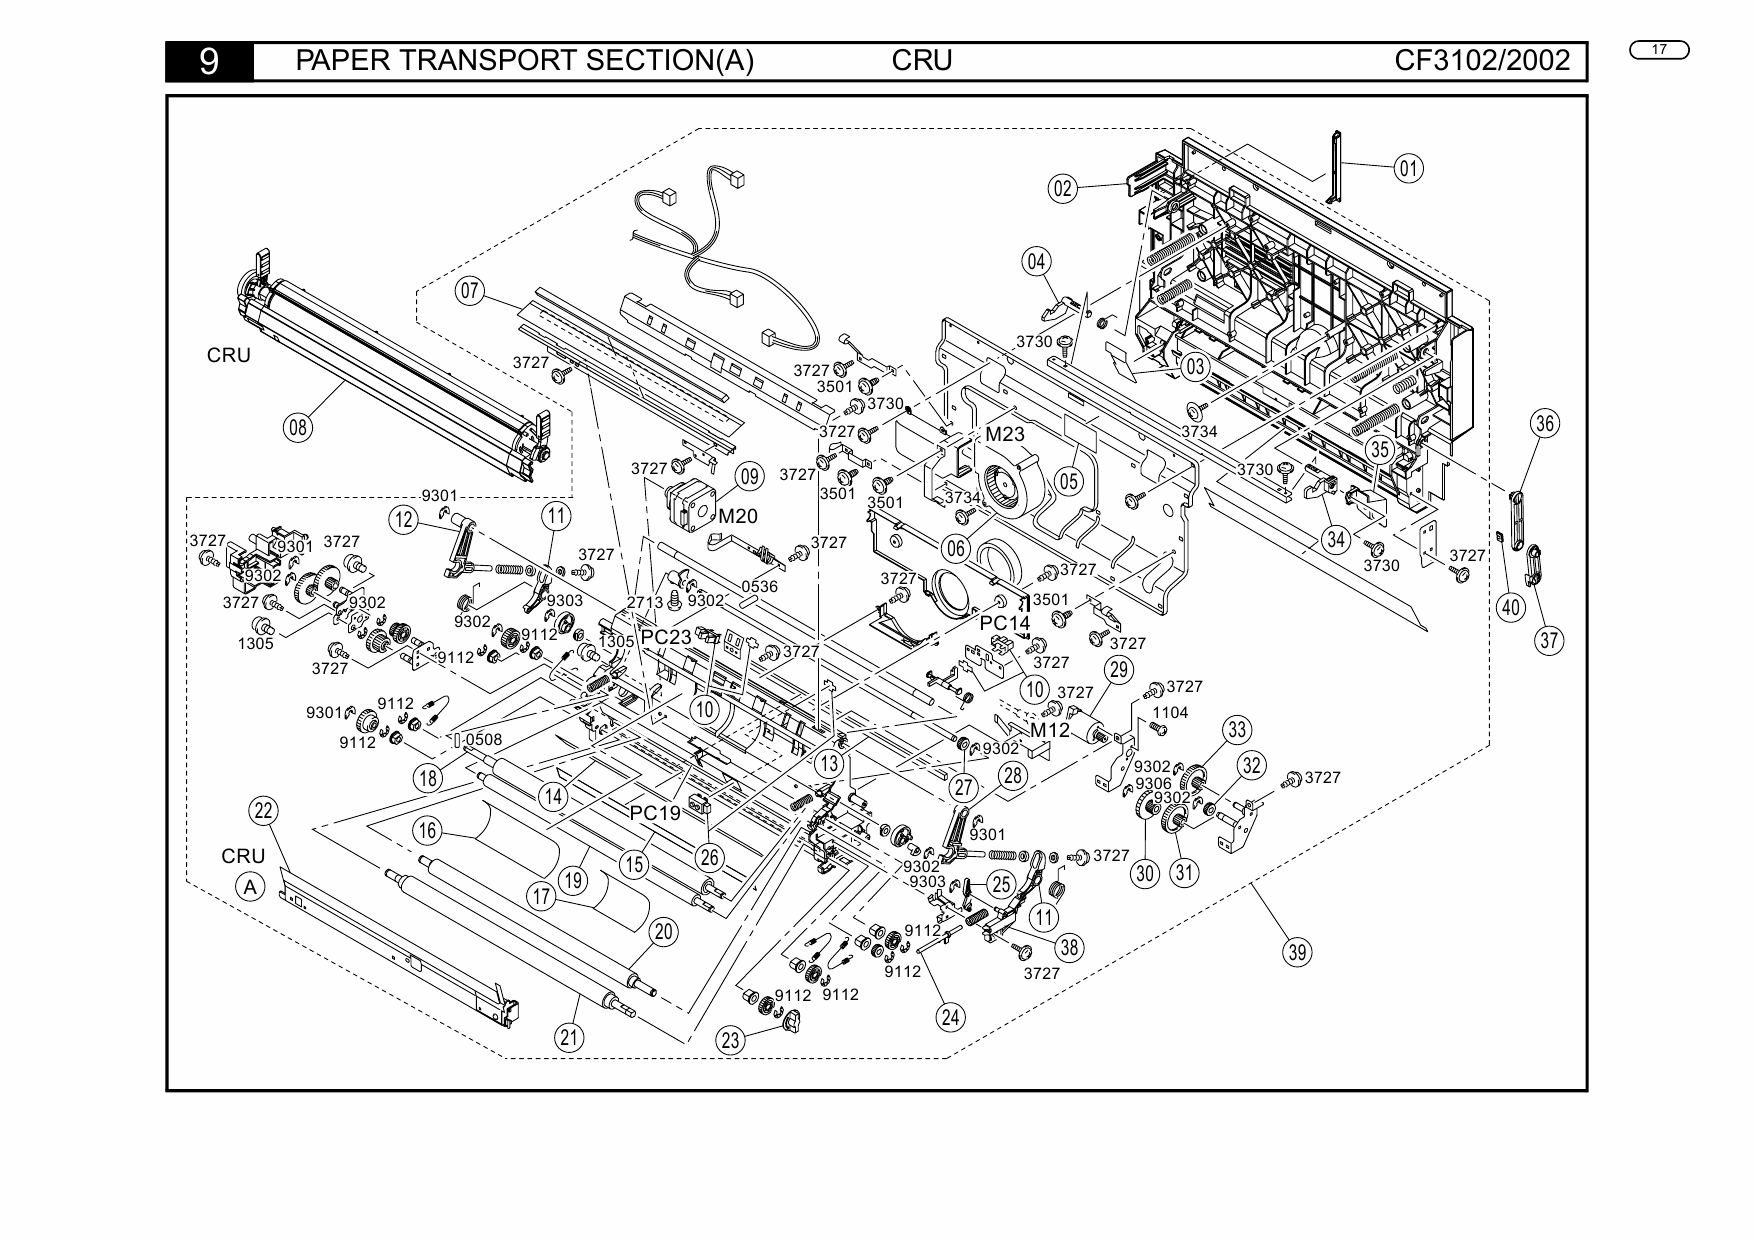 Konica-Minolta MINOLTA CF2002 3102 Parts Manual-4